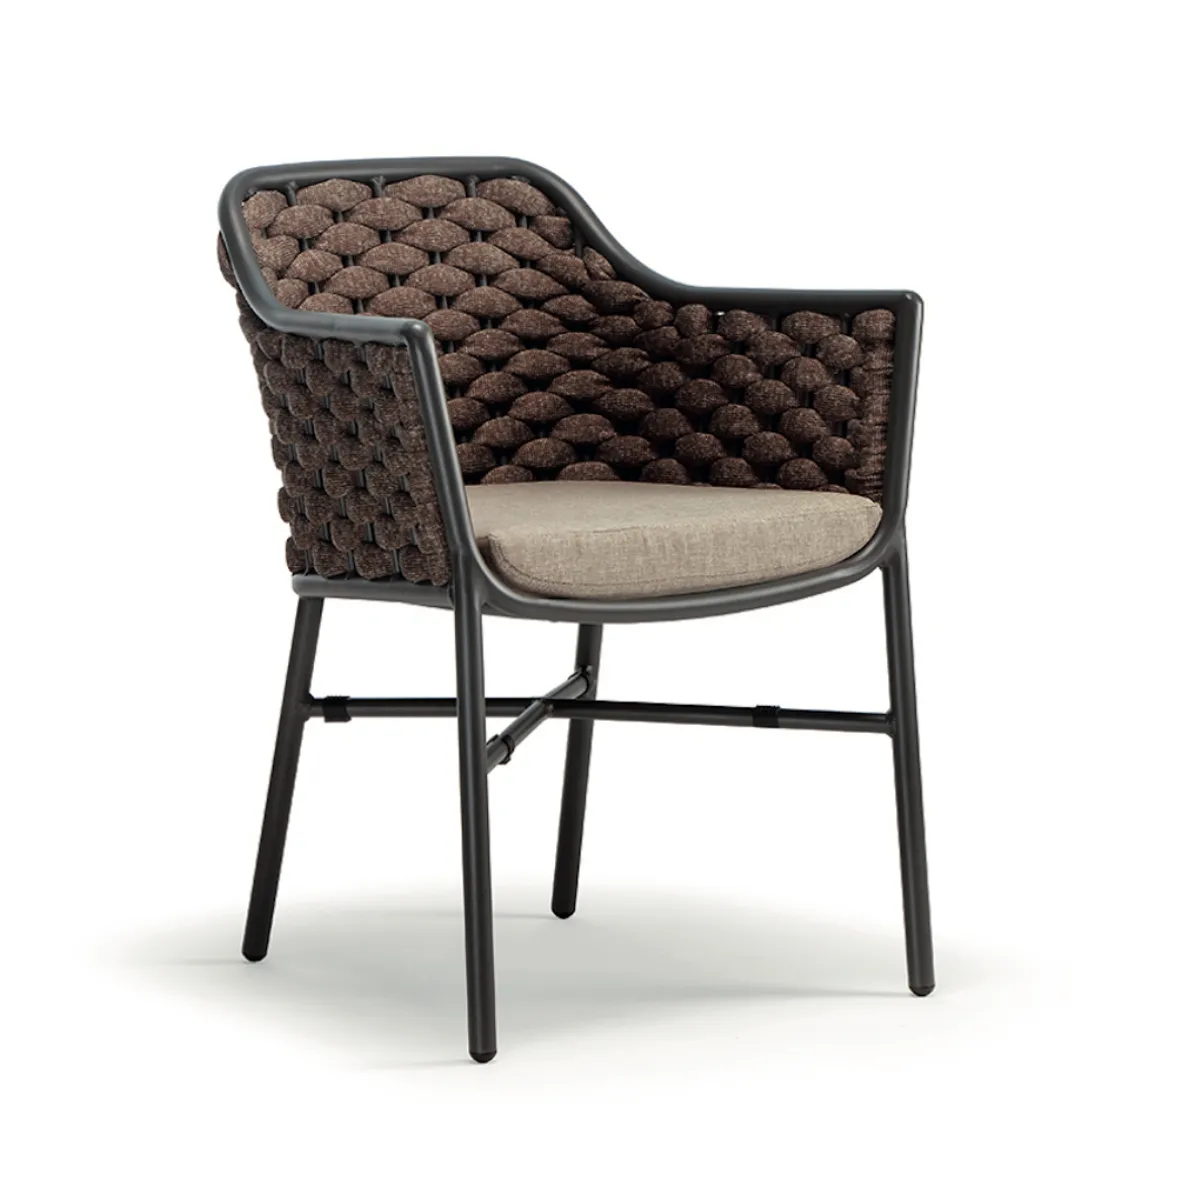 lorenzo armchair 6. Rope Furniture